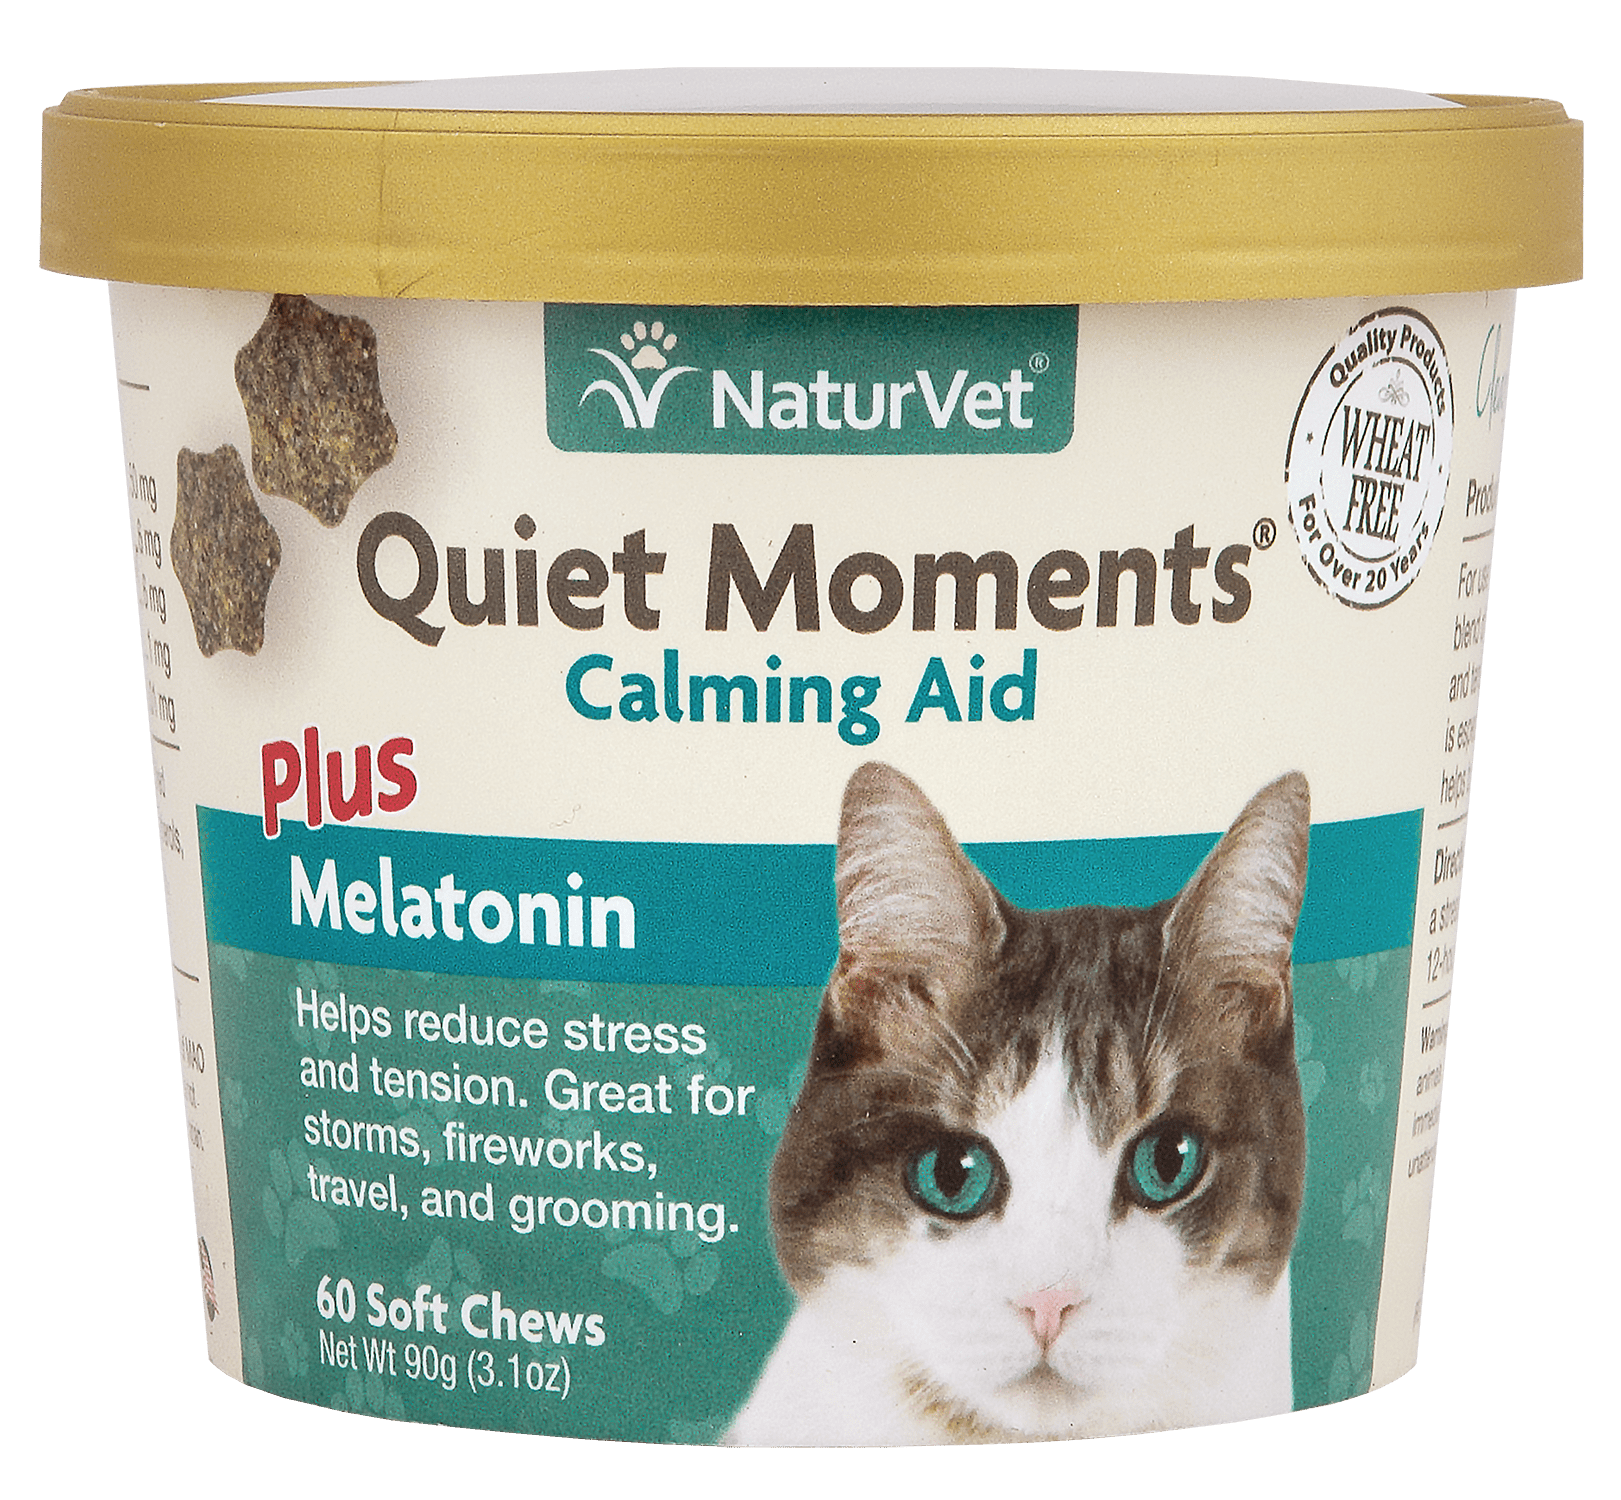 NaturVet Quiet Moments Calming Aid Plus Melatonin for Cats, 60 Soft